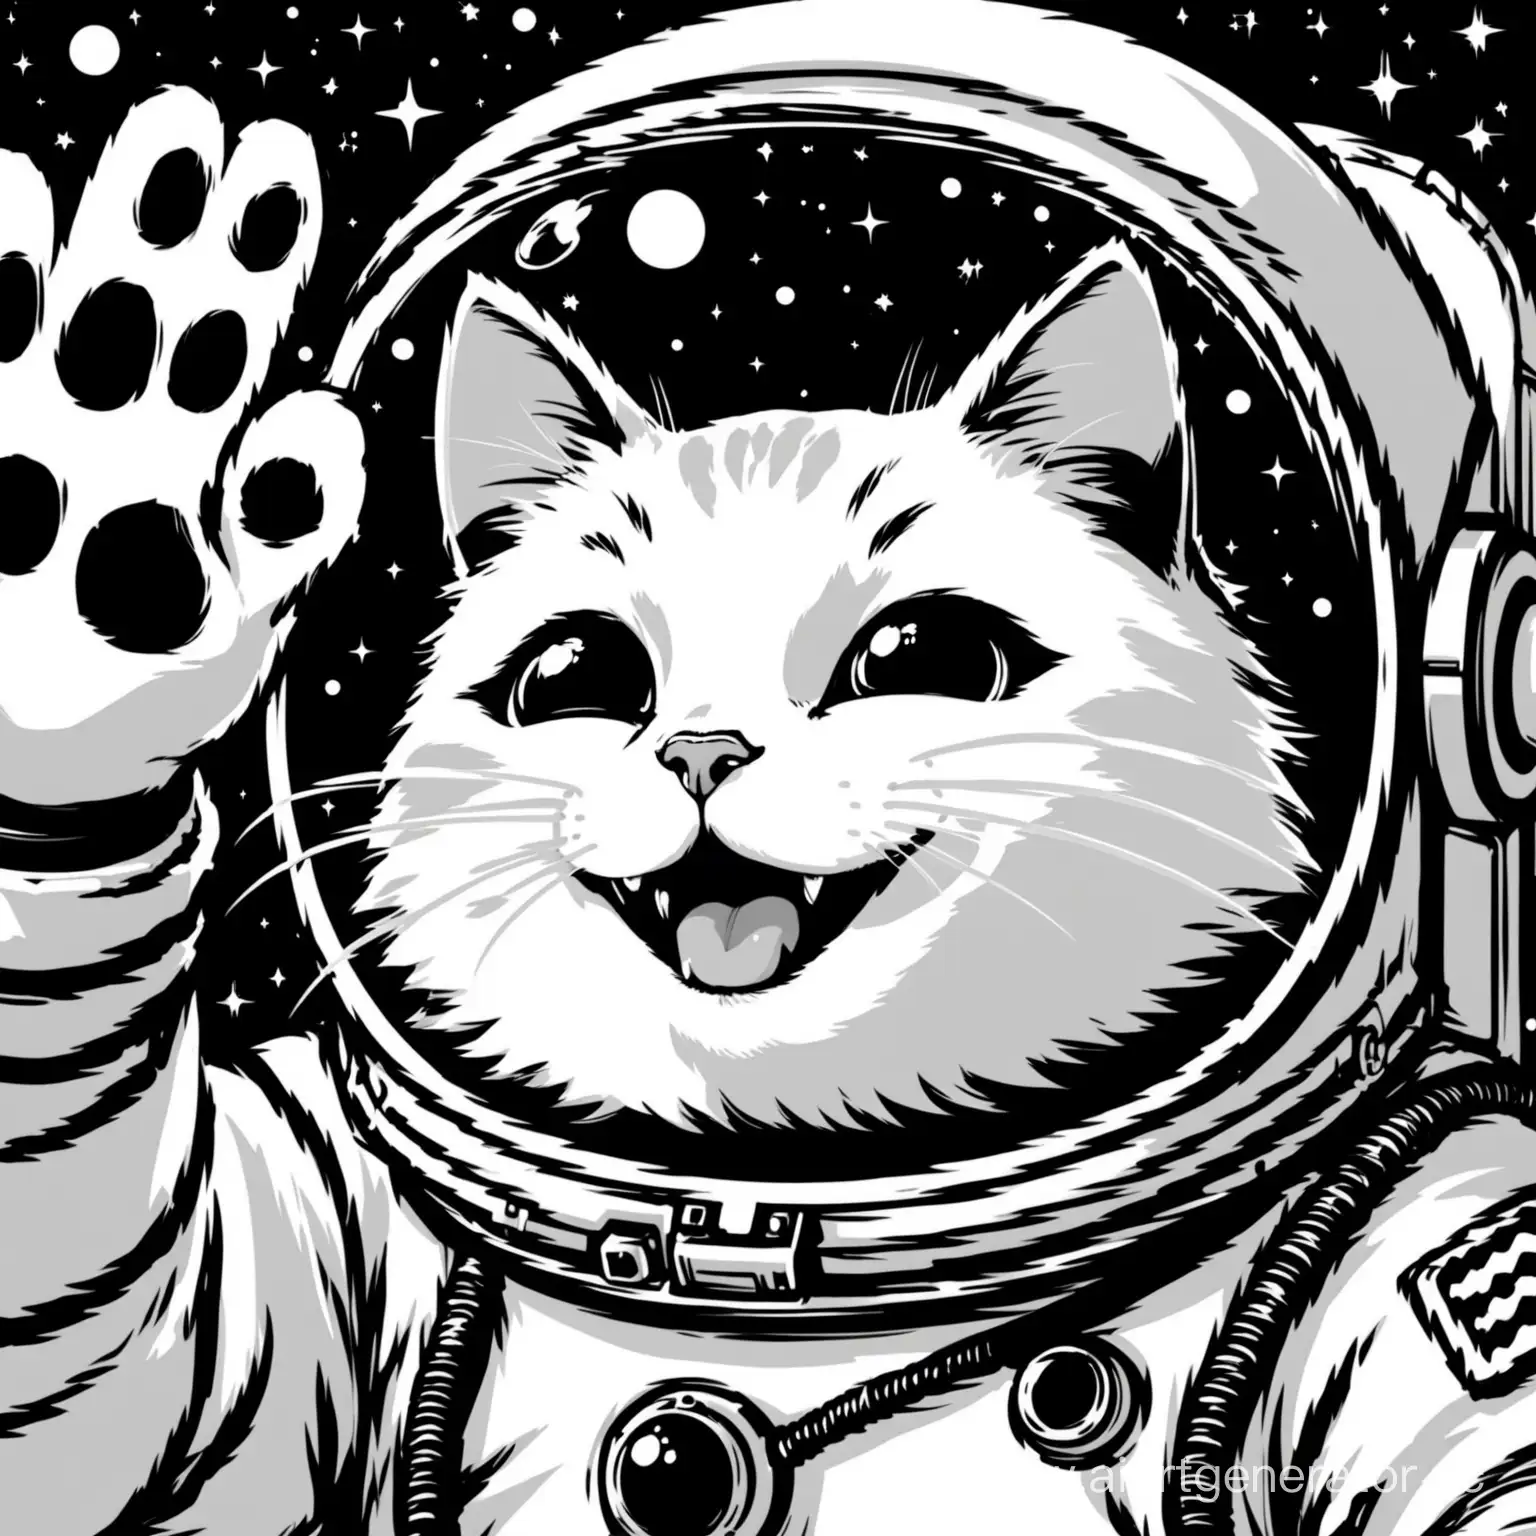 Smiling-Cosmonaut-Cat-Waving-Paw-in-CloseUp-Black-and-White-Portrait